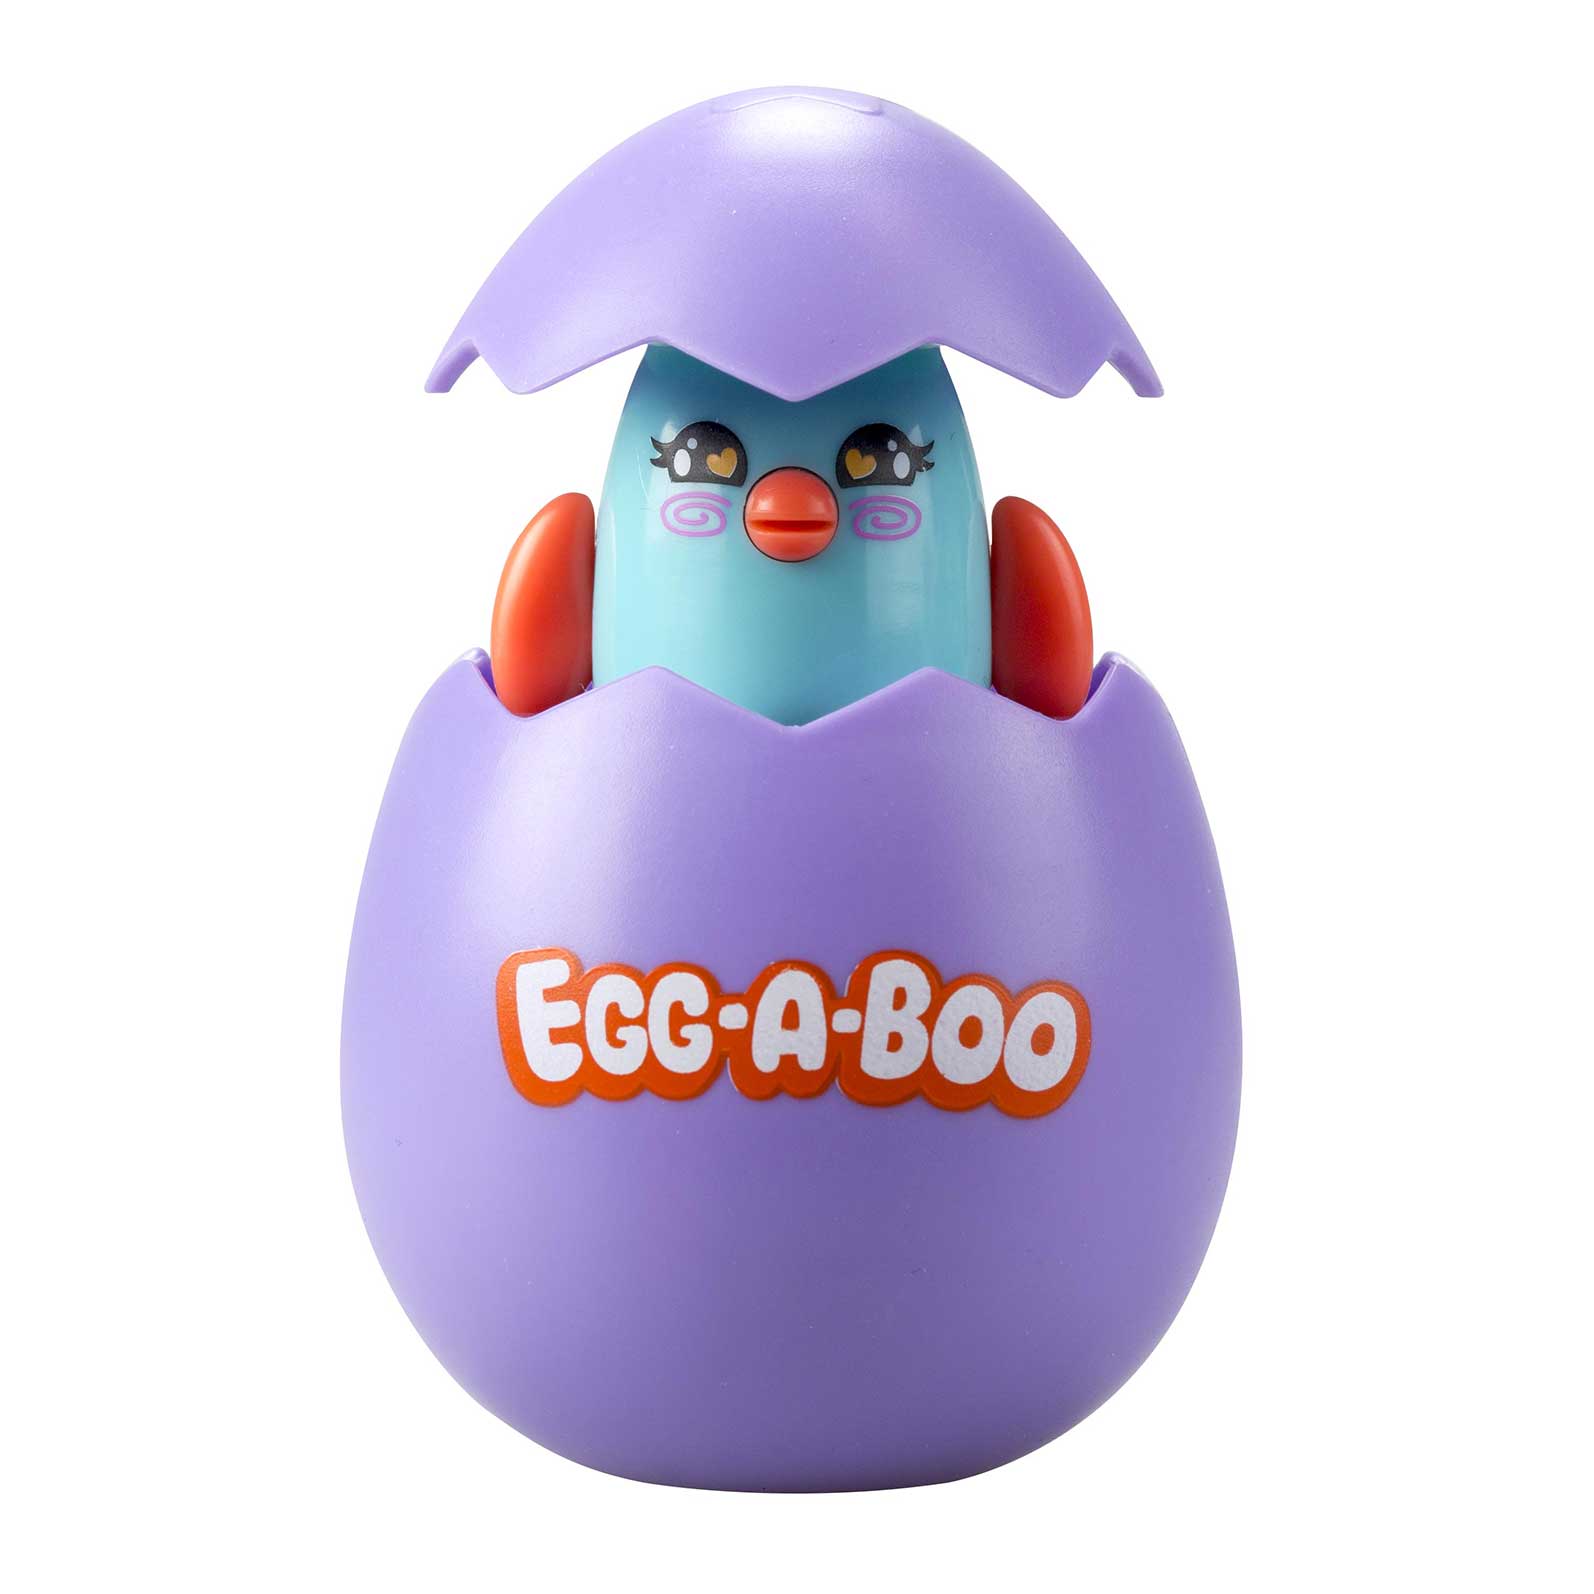 Concentra - Egg-a-boo - Ovos surpresa Sortido - Sítio do Bebé